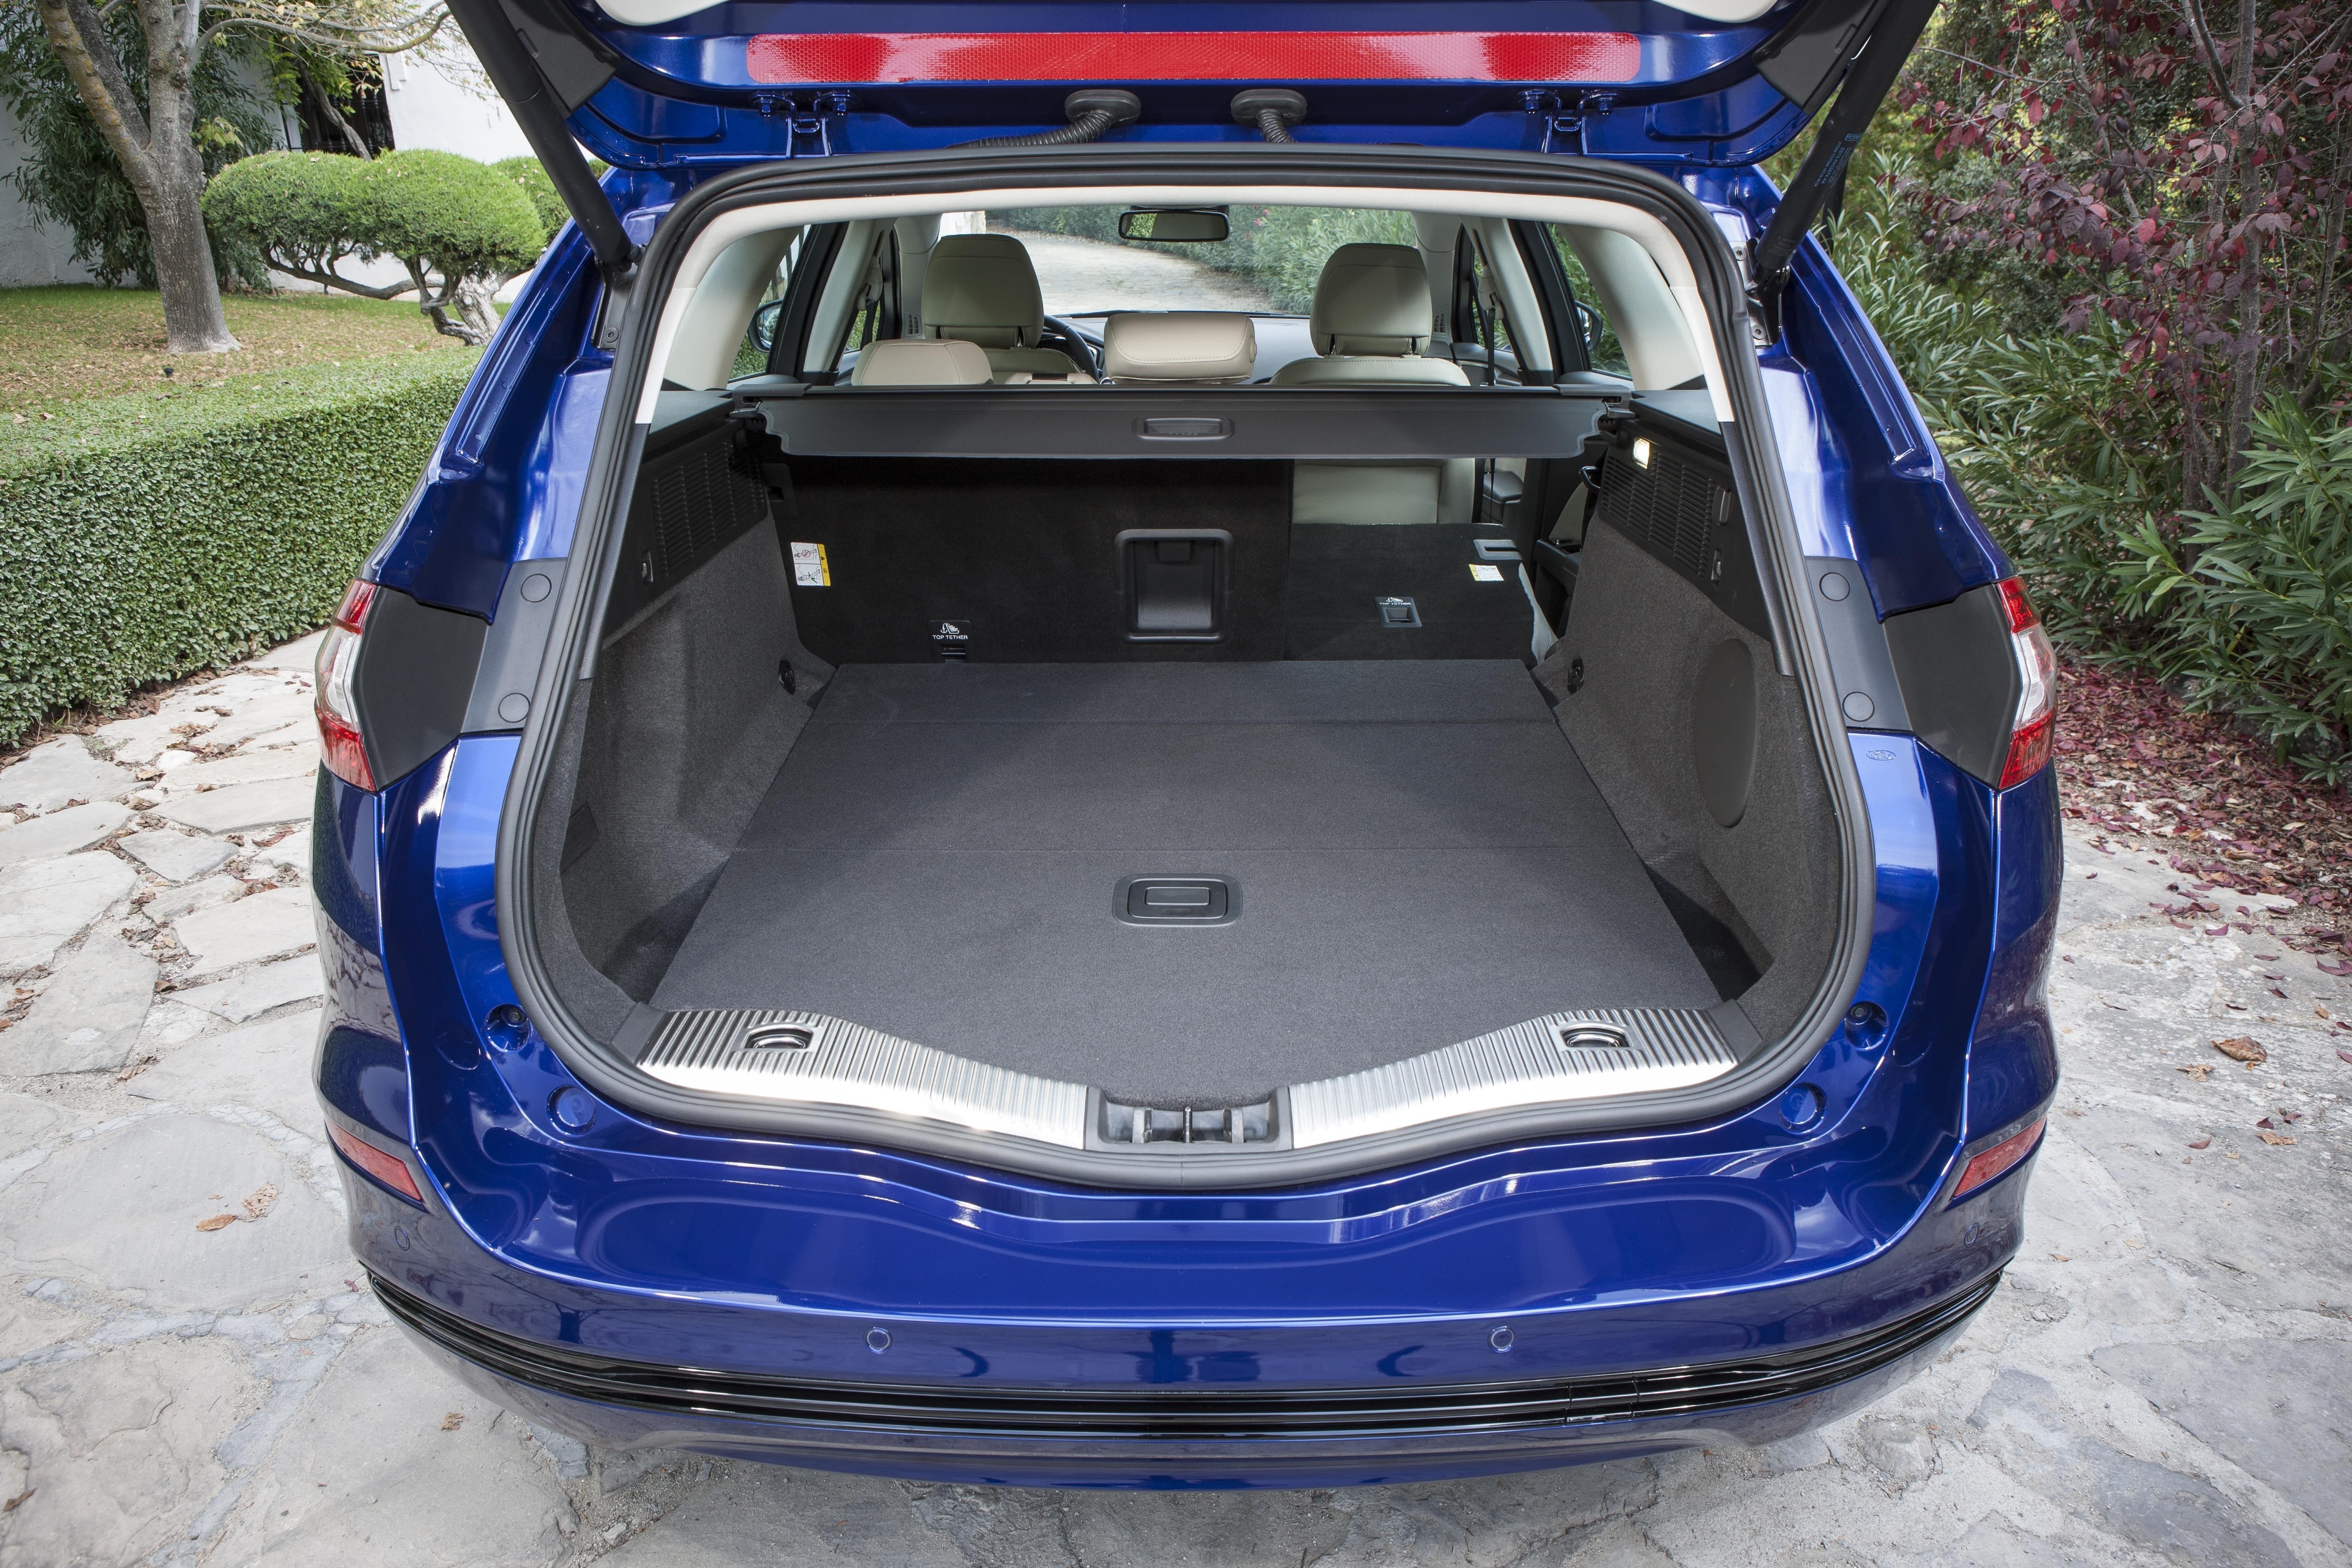 Ford Mondeo Liftback interior 2019